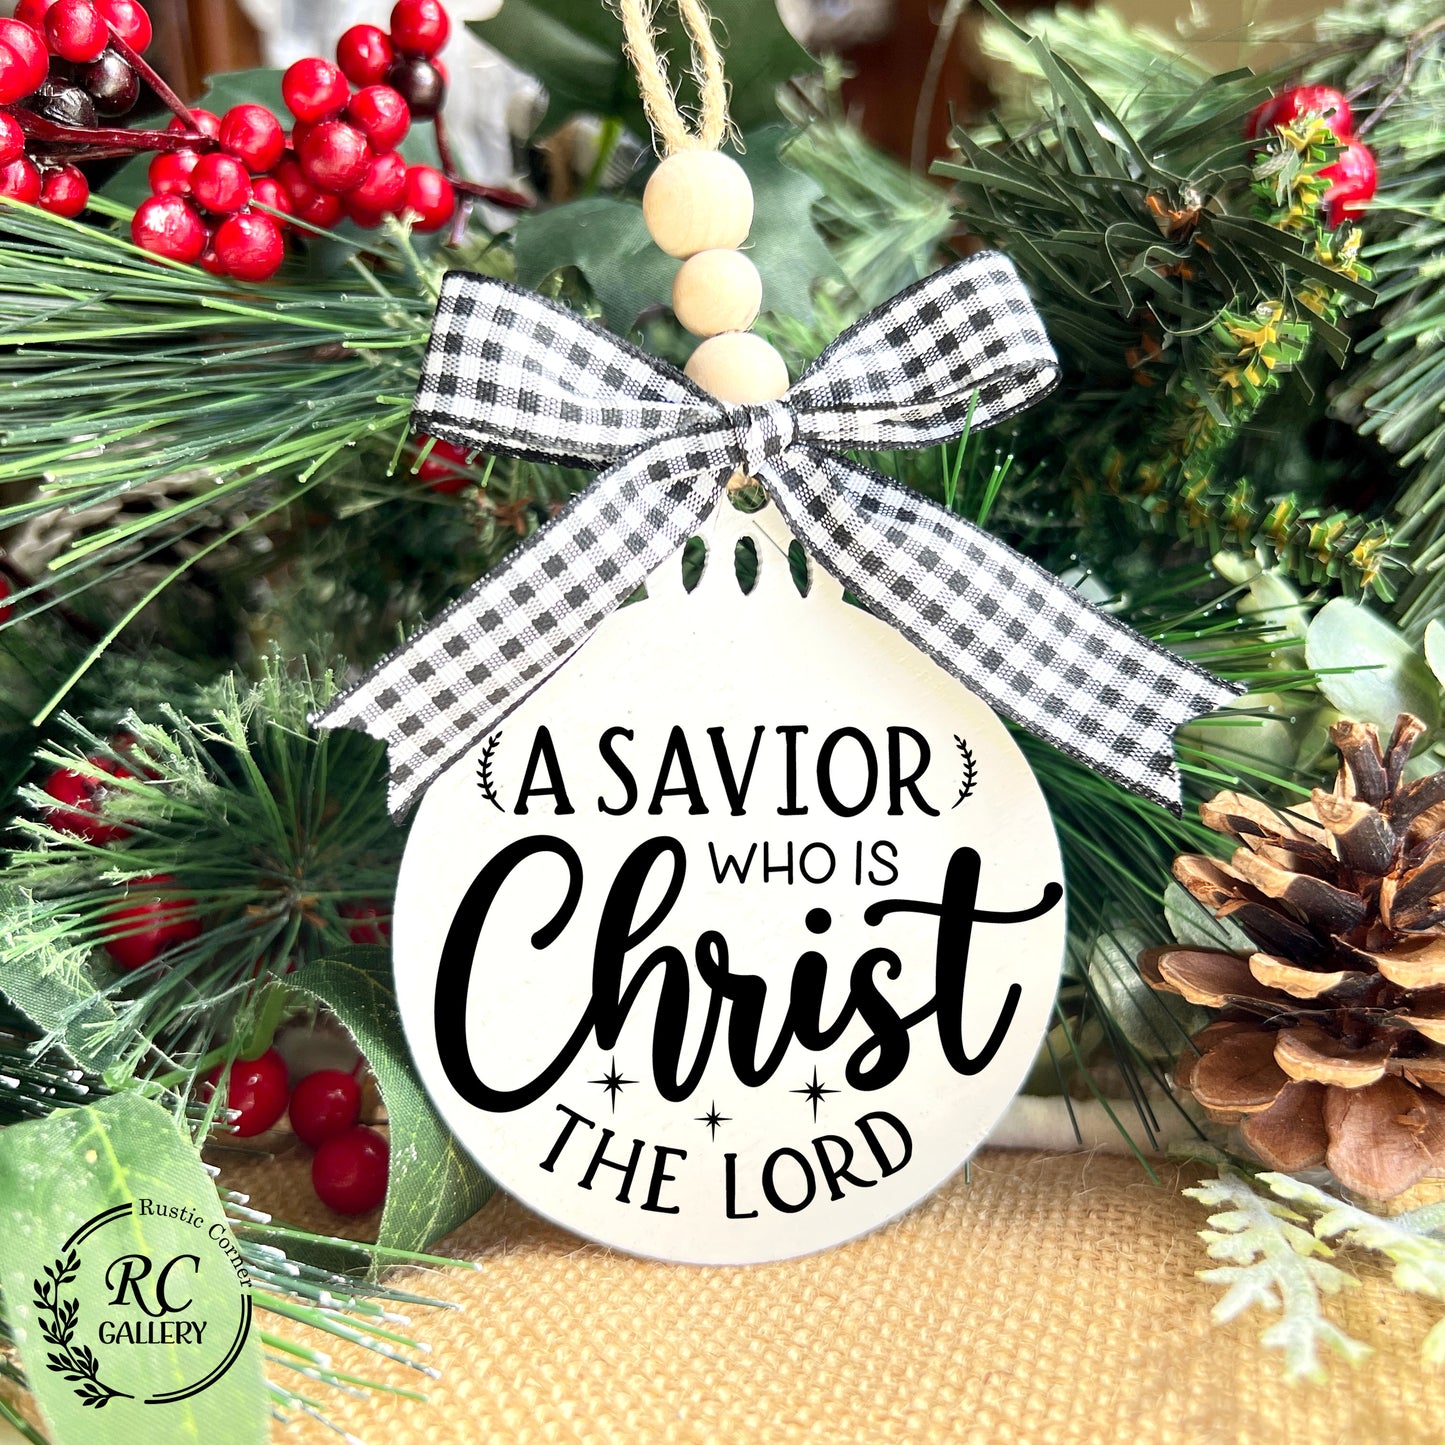 A savior who is Christ the lord Christmas Ornament.